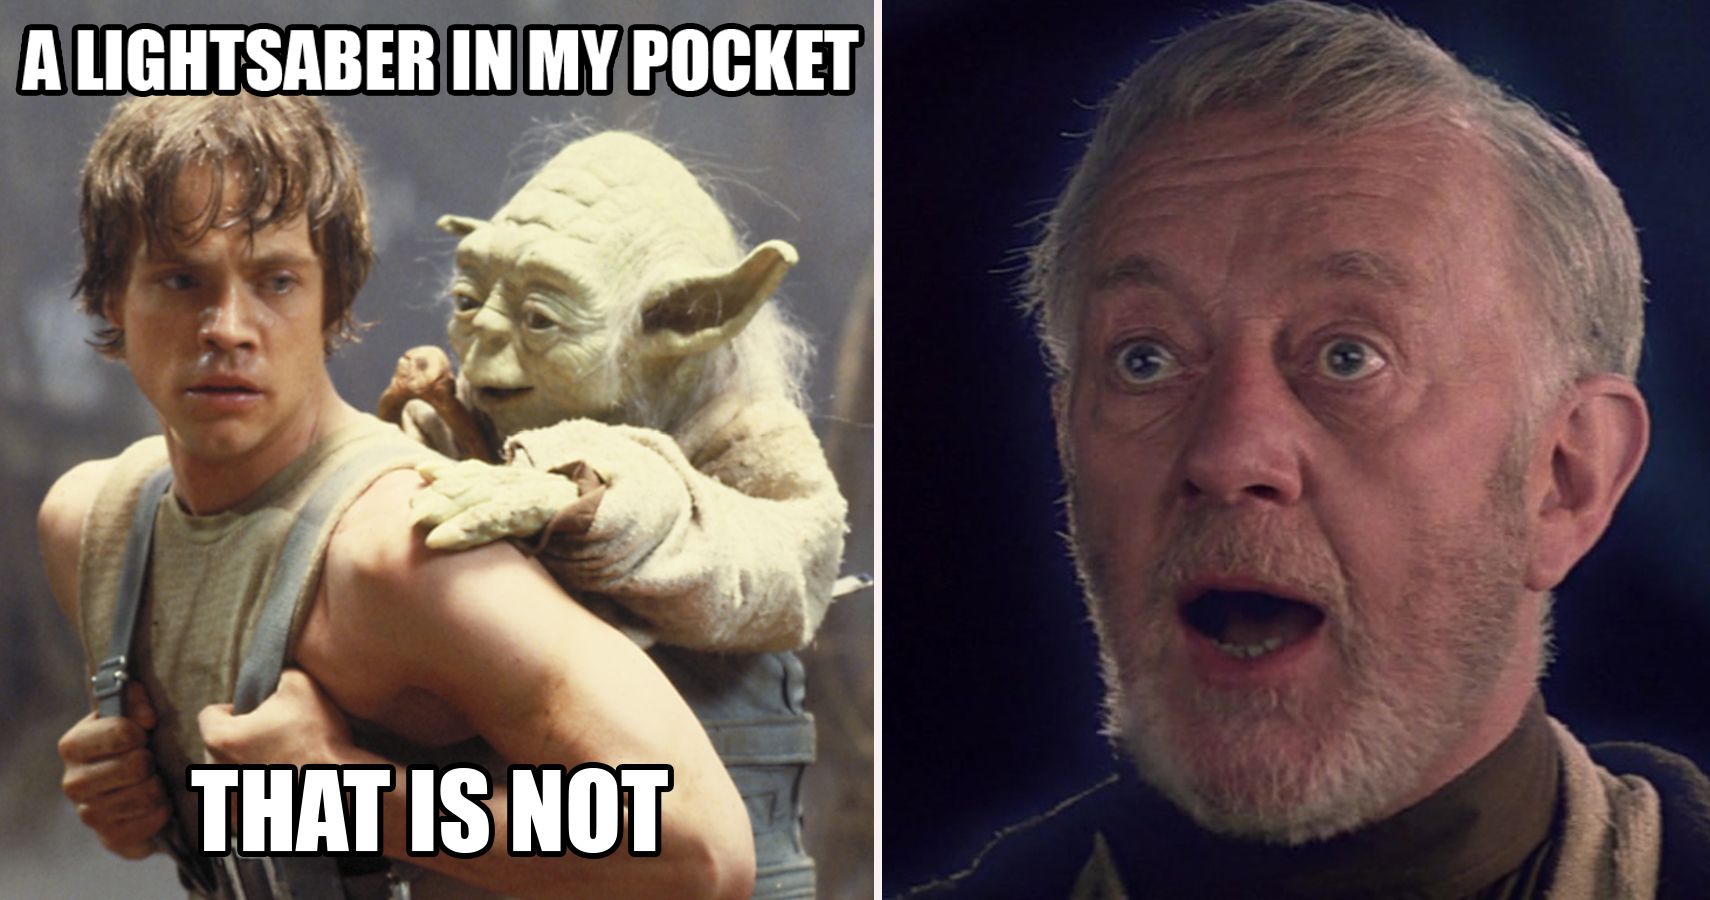 Star Wars Memes That Crossed The Line TheGamer